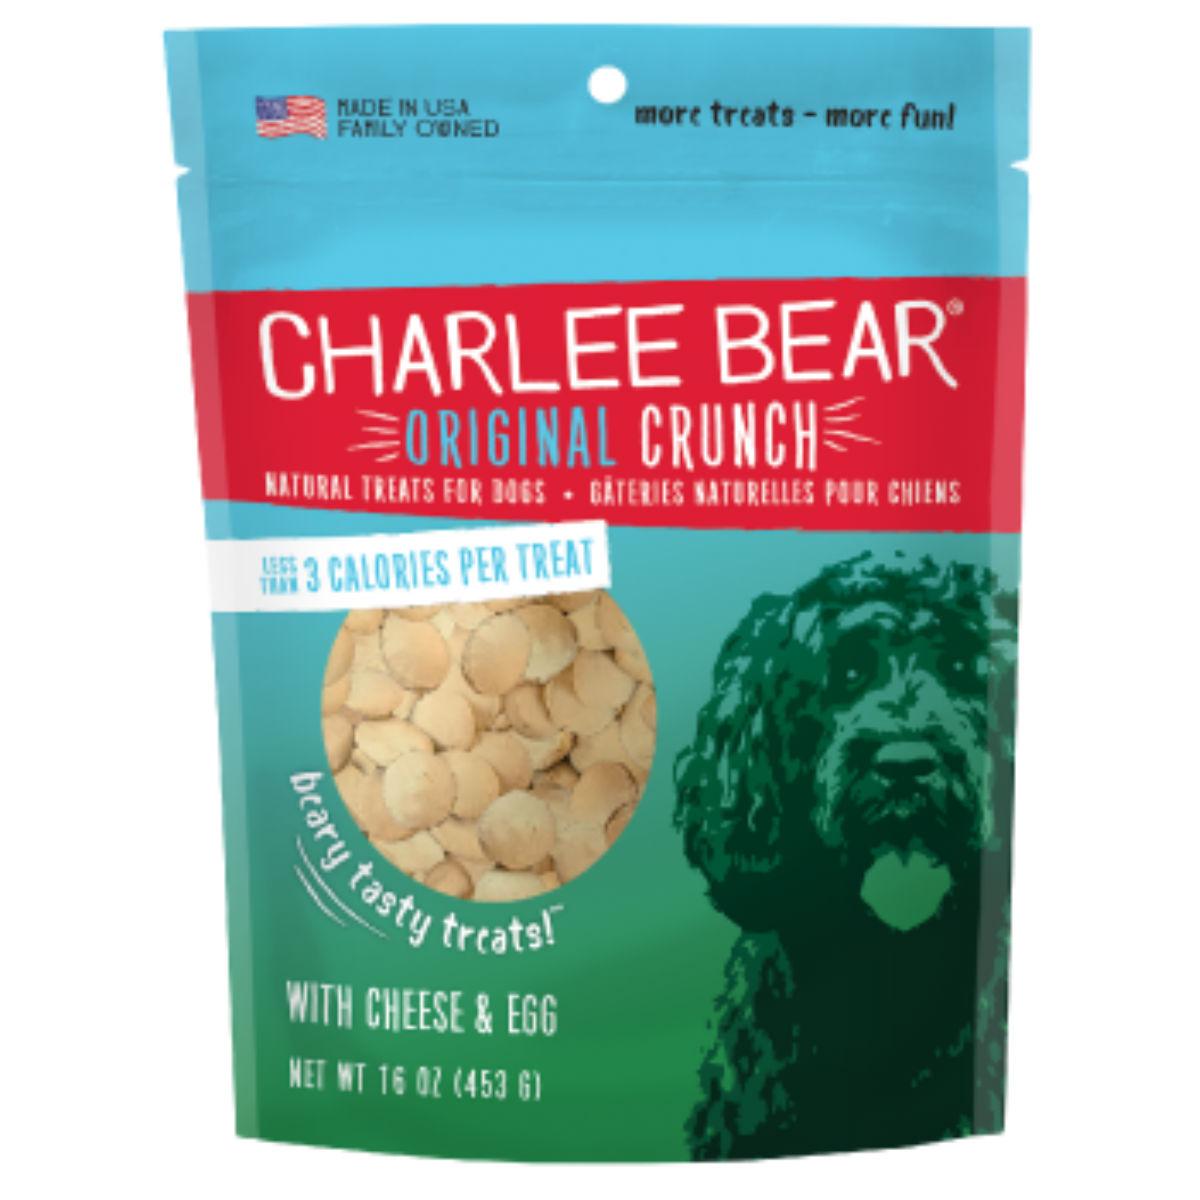 Charlee Bear Original Crunch Dog Treats - Cheese and Egg